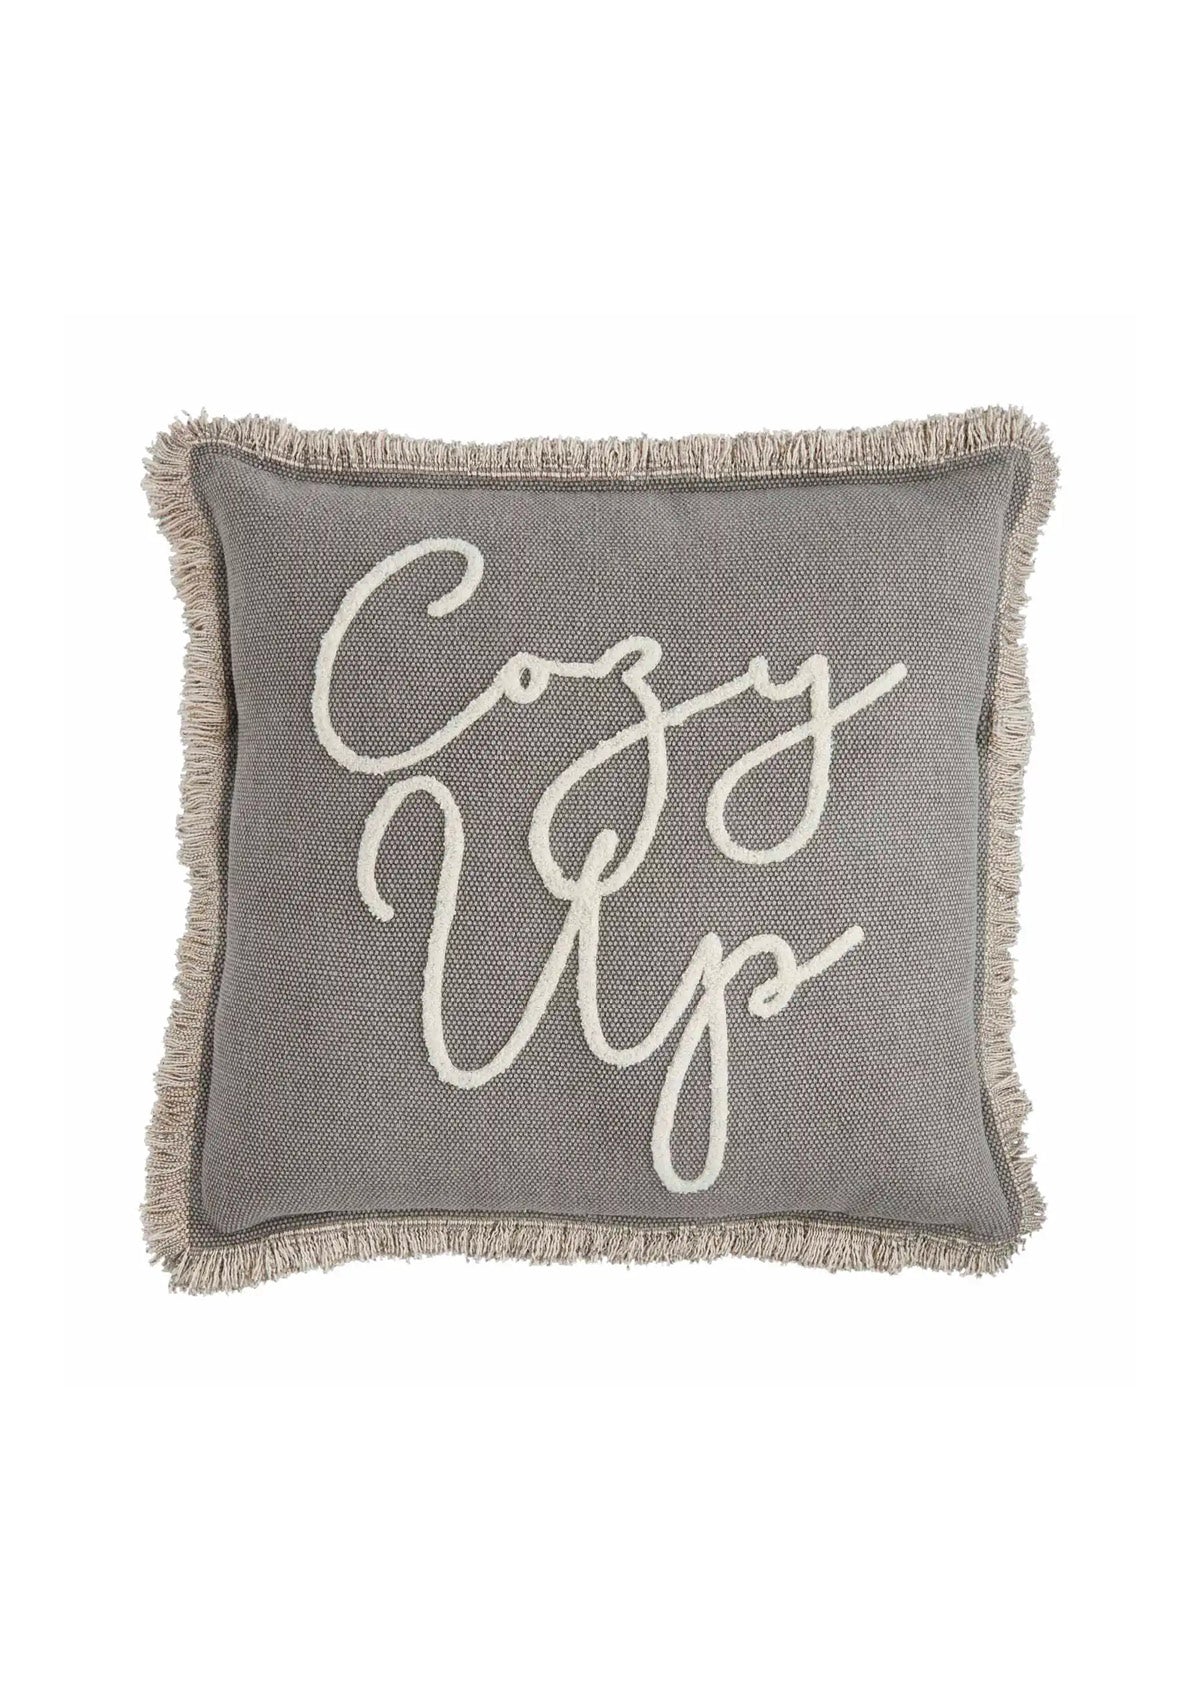 'Cozy Up' Throw Pillow -Mud Pie- Ruby Jane-